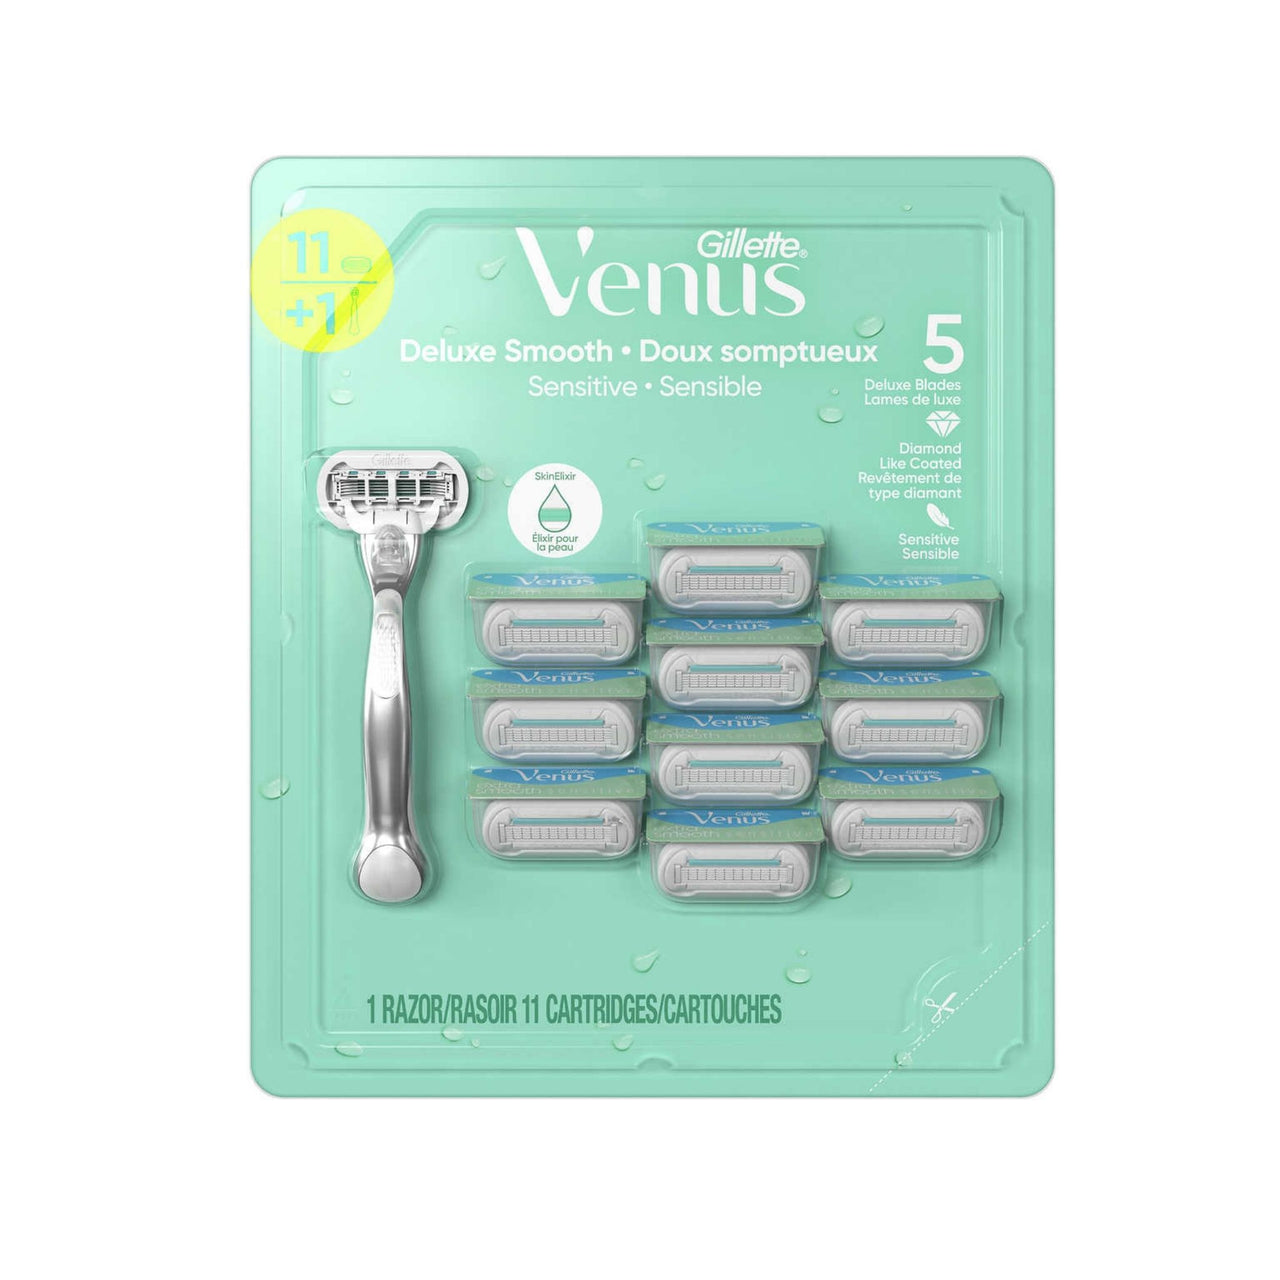 Image of Venus Platinum Deluxe Smooth Sensitive Razor with Cartridges, 1 Handle + 11 Refills